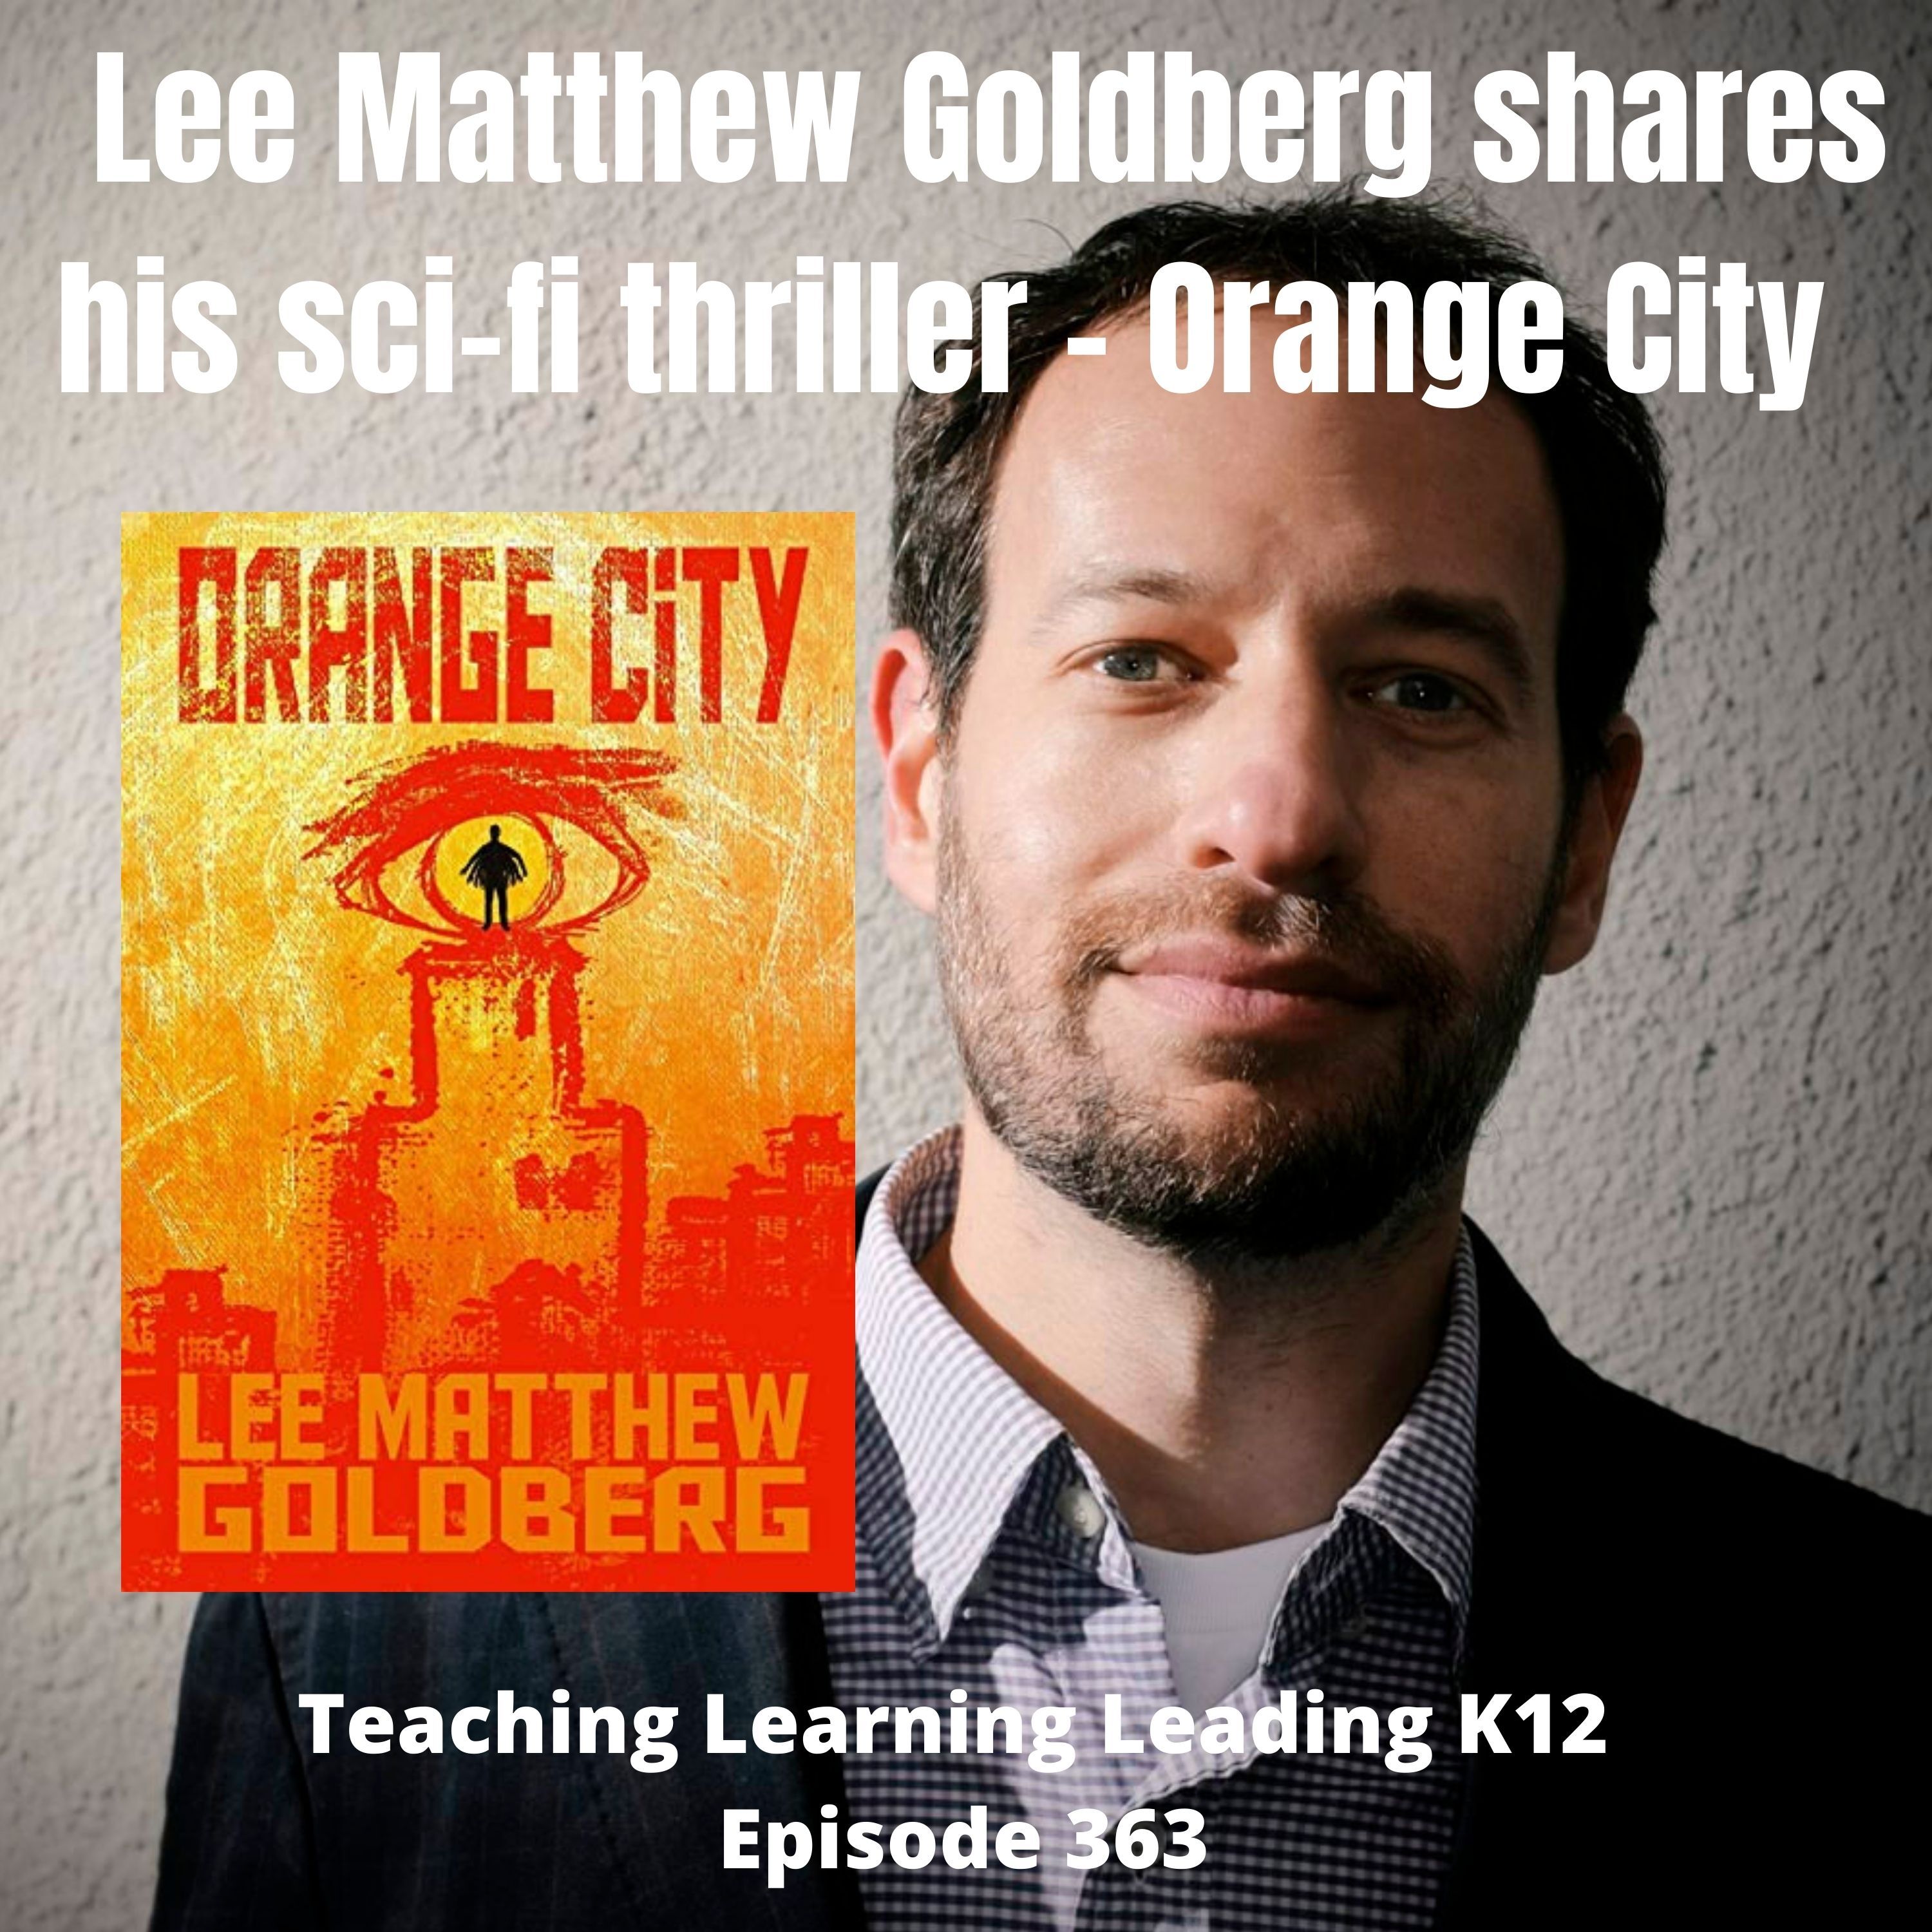 Lee Matthew Goldberg Shares His Sci-Fi Thriller - Orange City - 363 Image